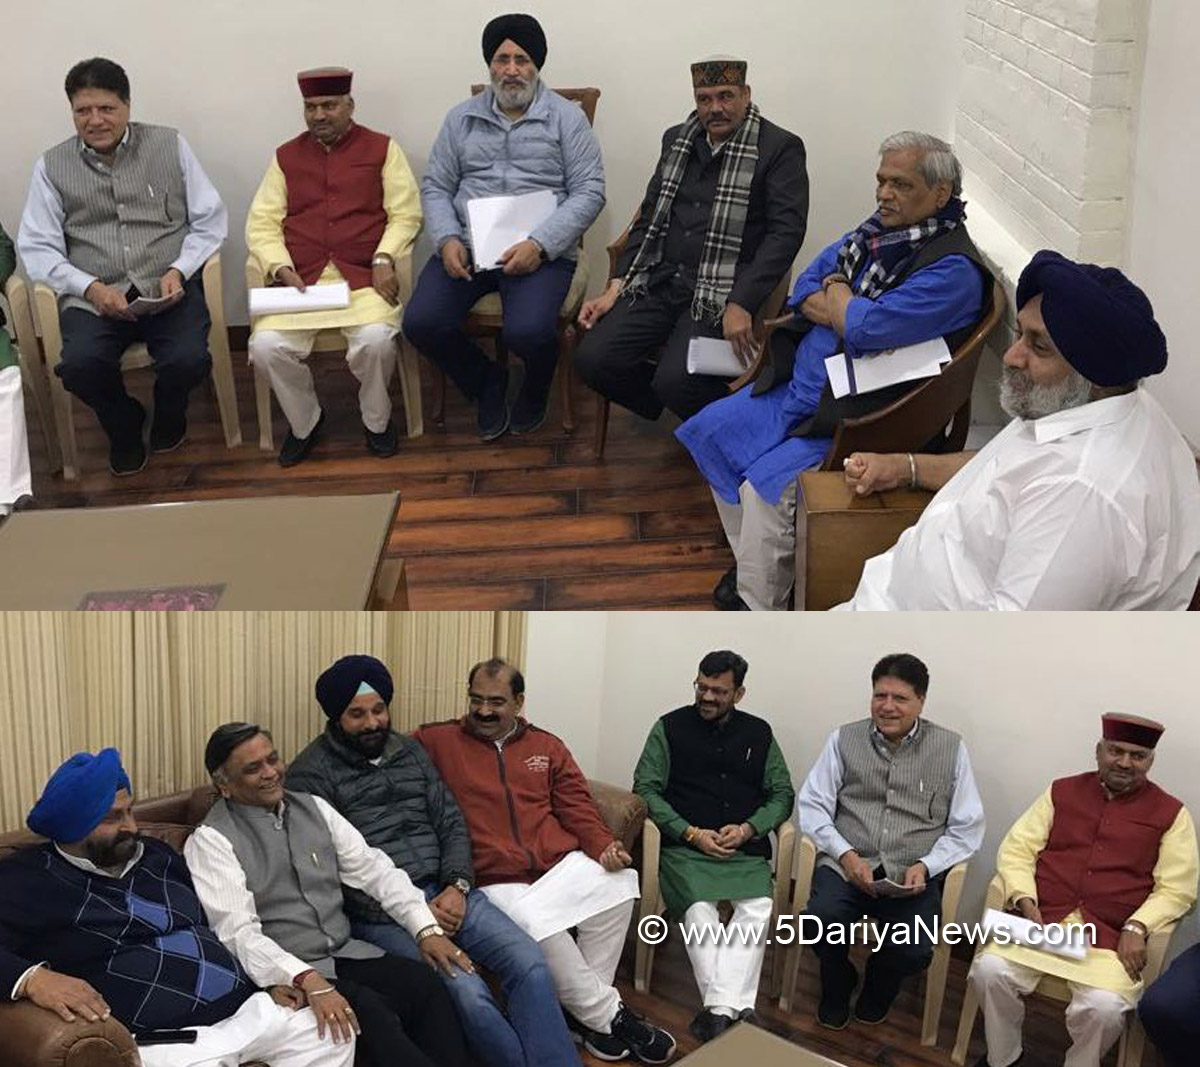 Sukhbir Singh Badal, Vijay Sampla and other senior leaders during the meeting